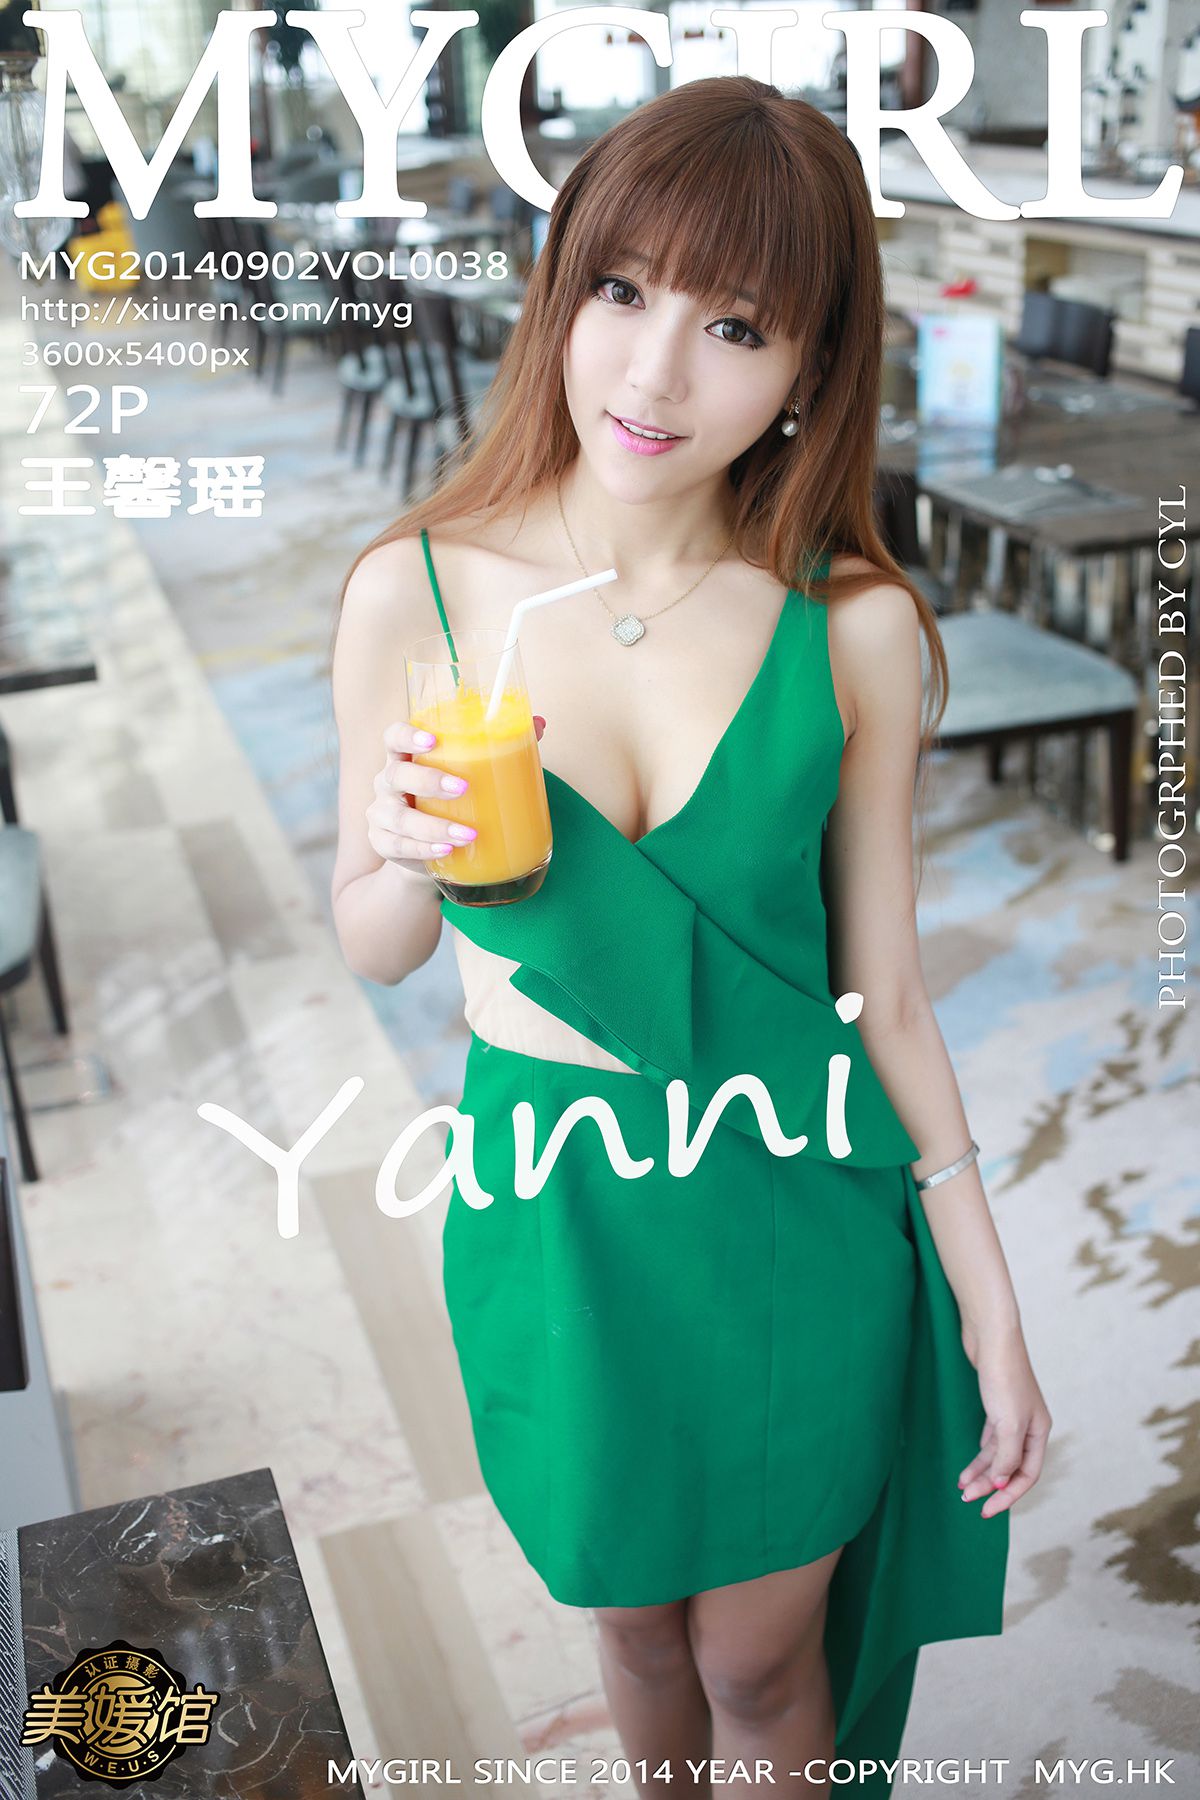 【MyGirl】 2014.09.02 Vol.038 王馨瑶yanni  72P